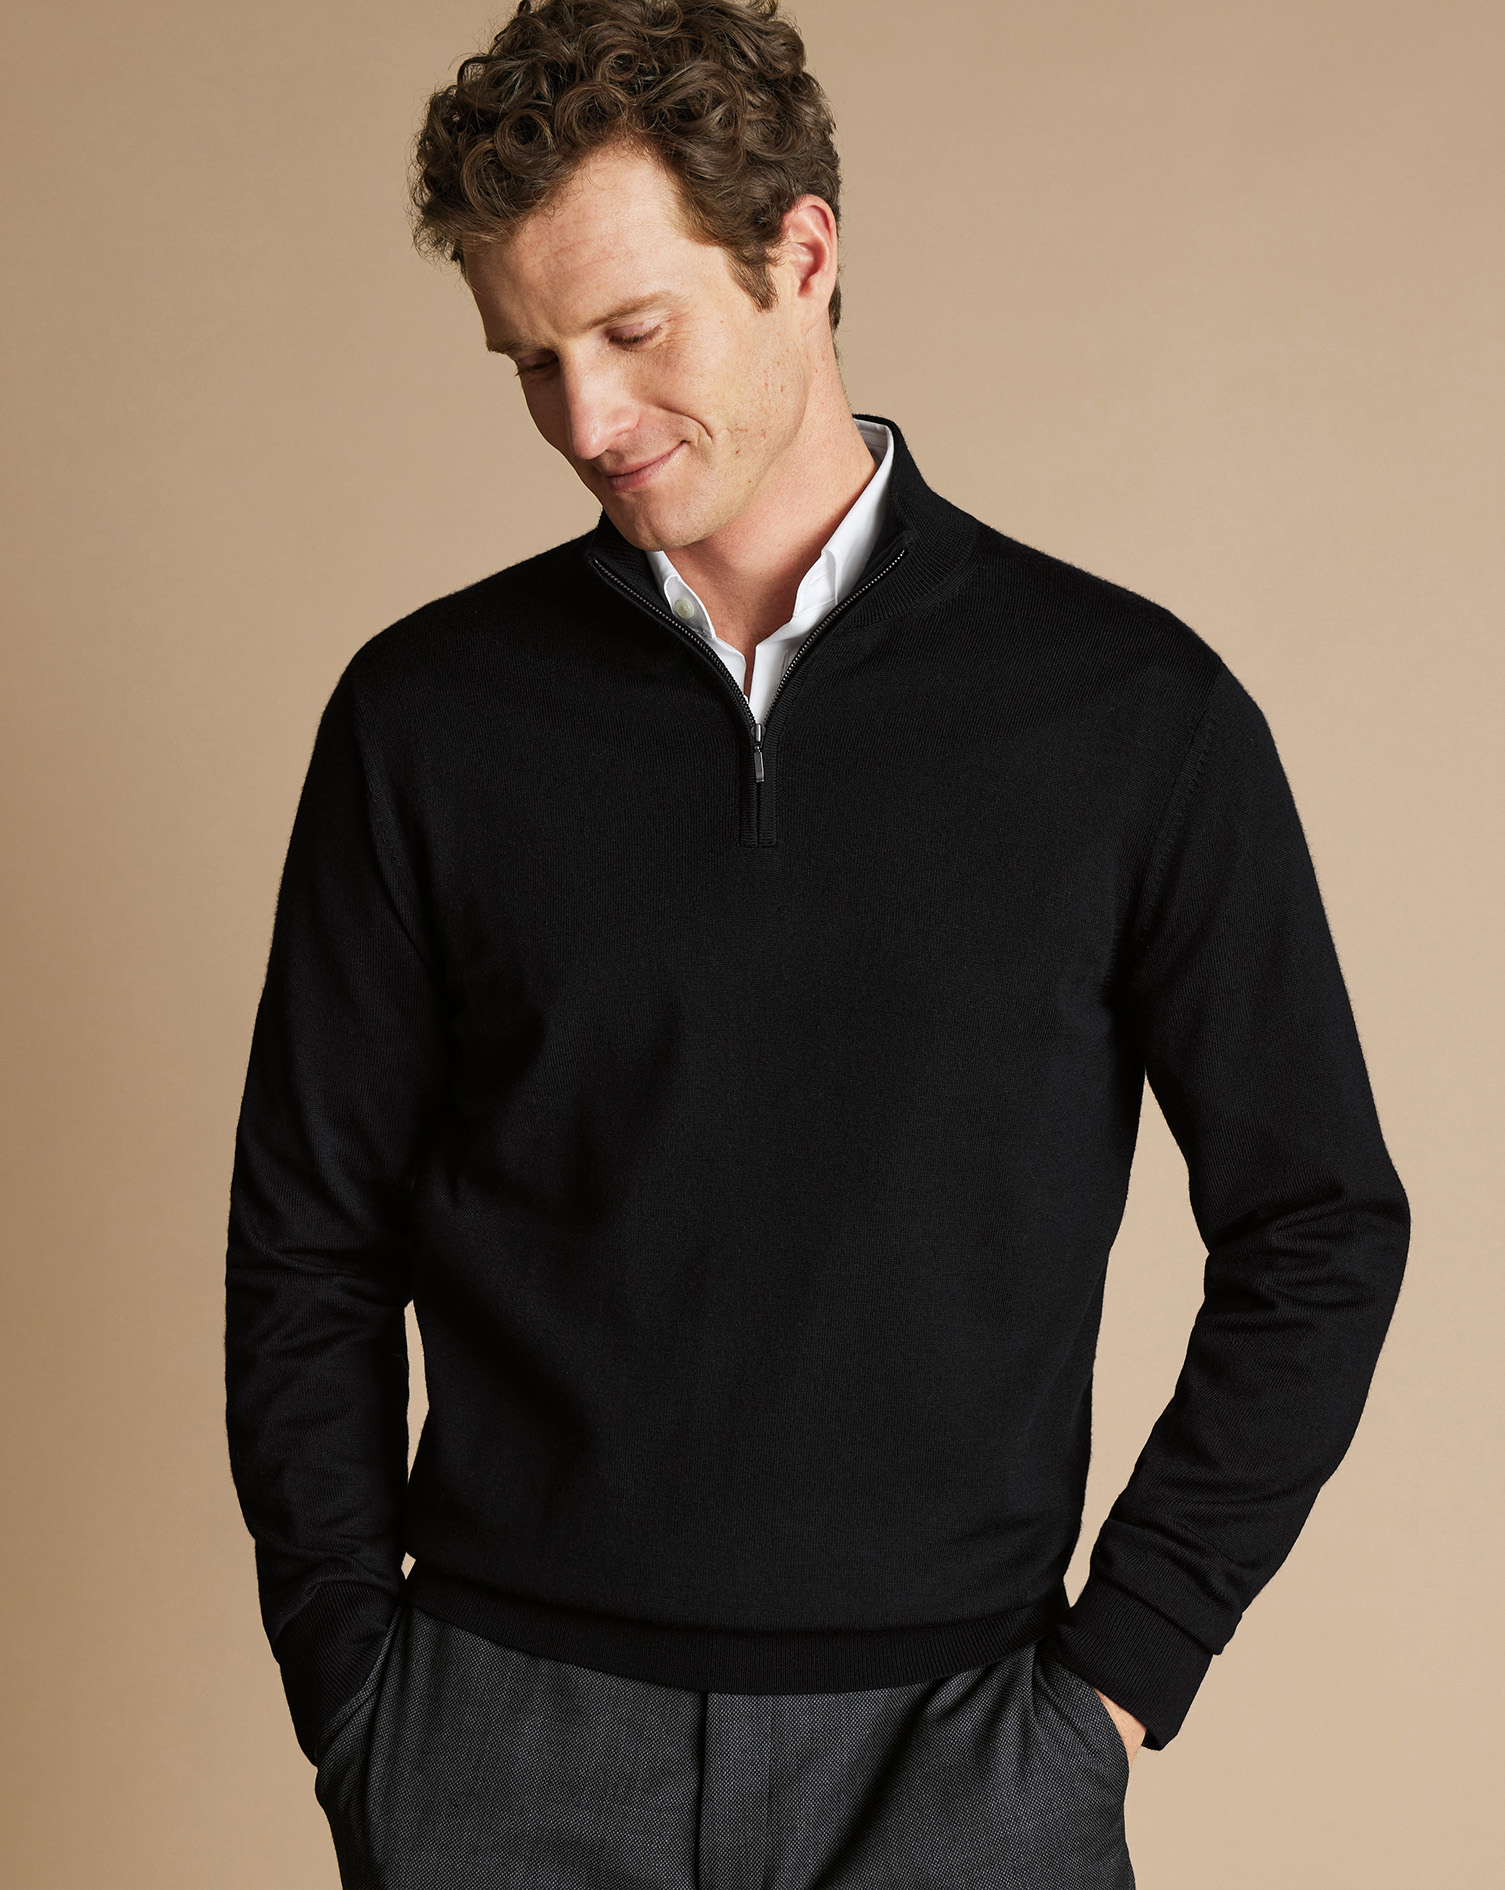 Men's Charles Tyrwhitt Zip Neck Sweater - Black Size XXXL Merino
